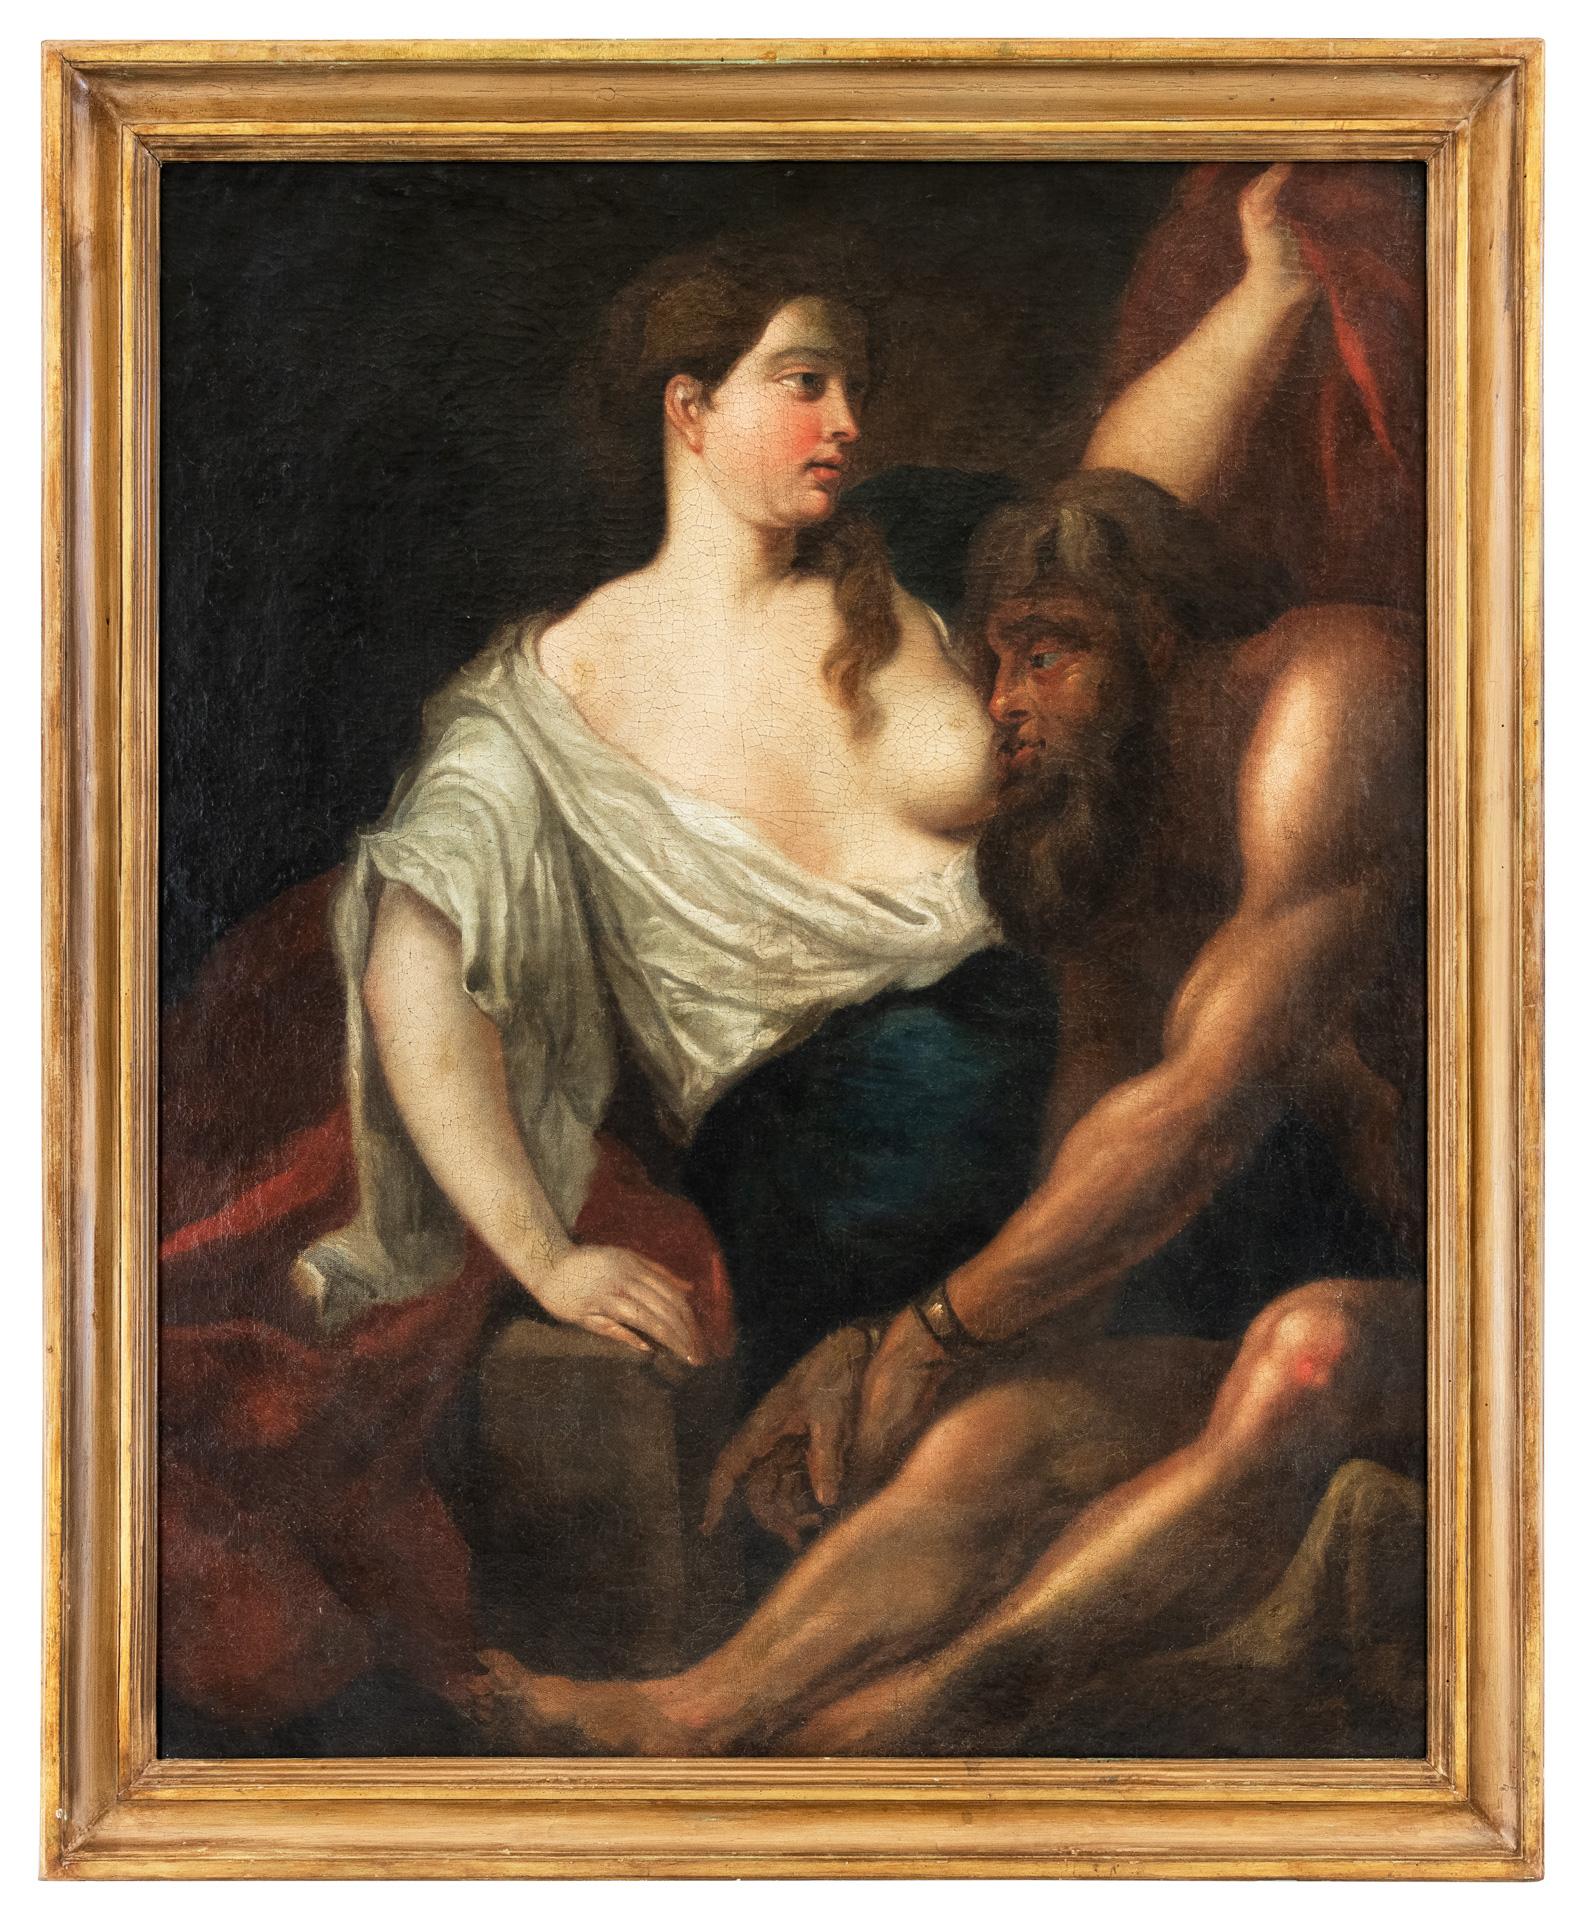 Sir Pieter Paul Rubens Nude Painting - 17th century Italian figure painting - Caritas - Oil on canvas Rubens follower